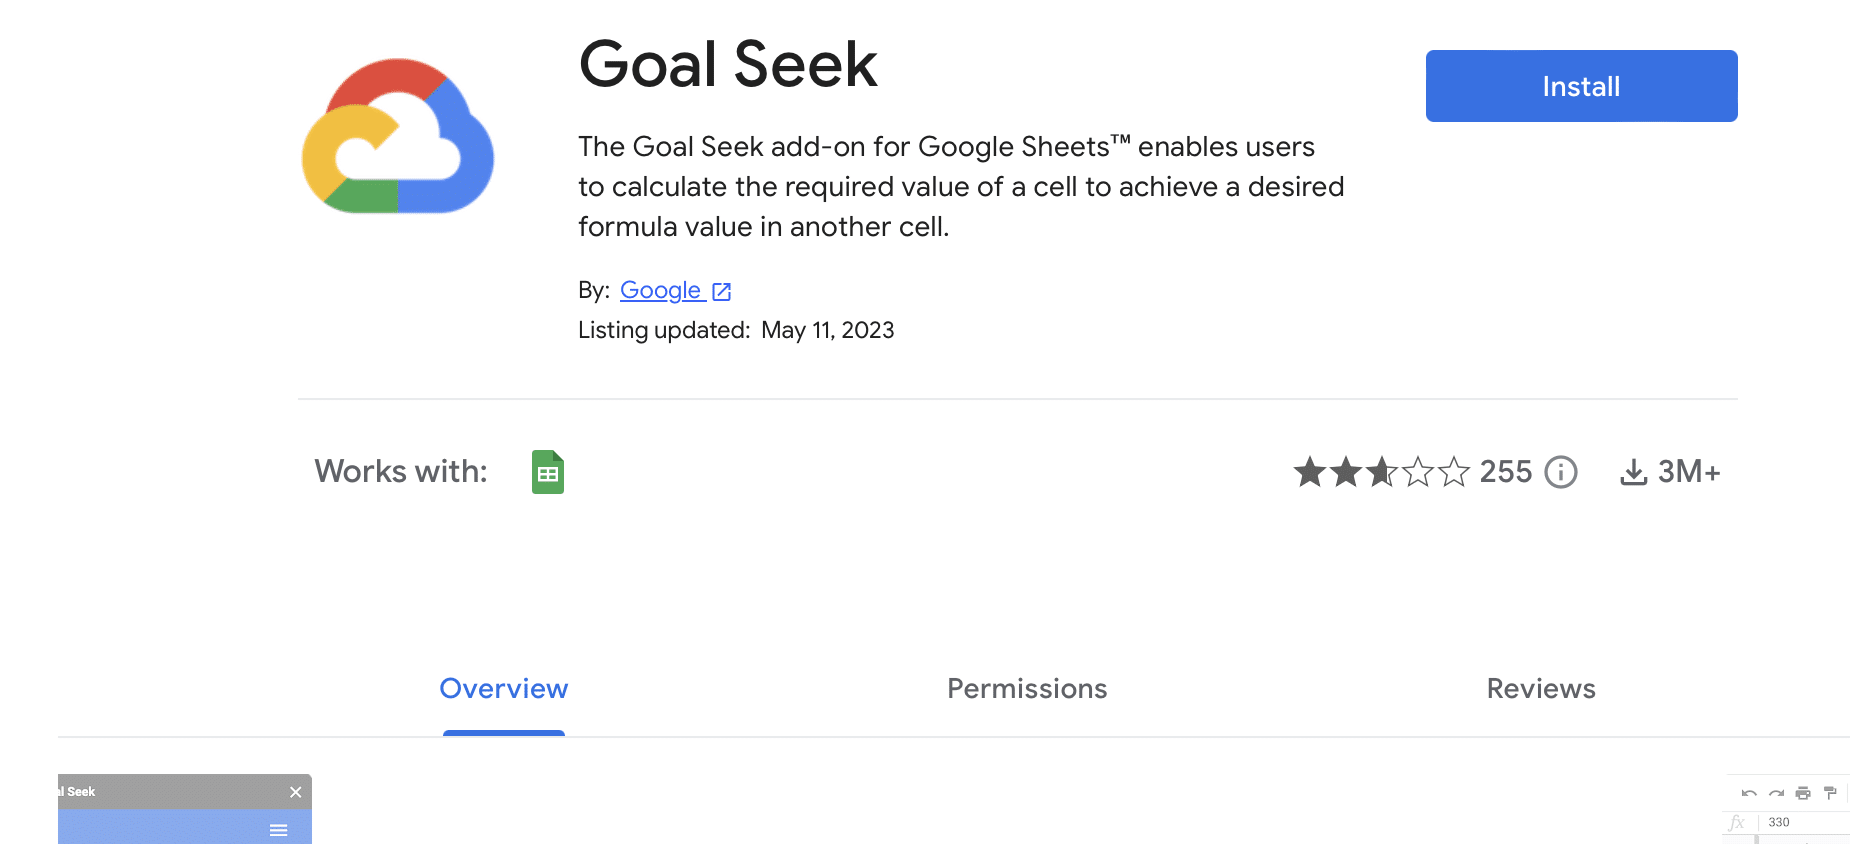 Installing Goal Seek for your Google Sheets